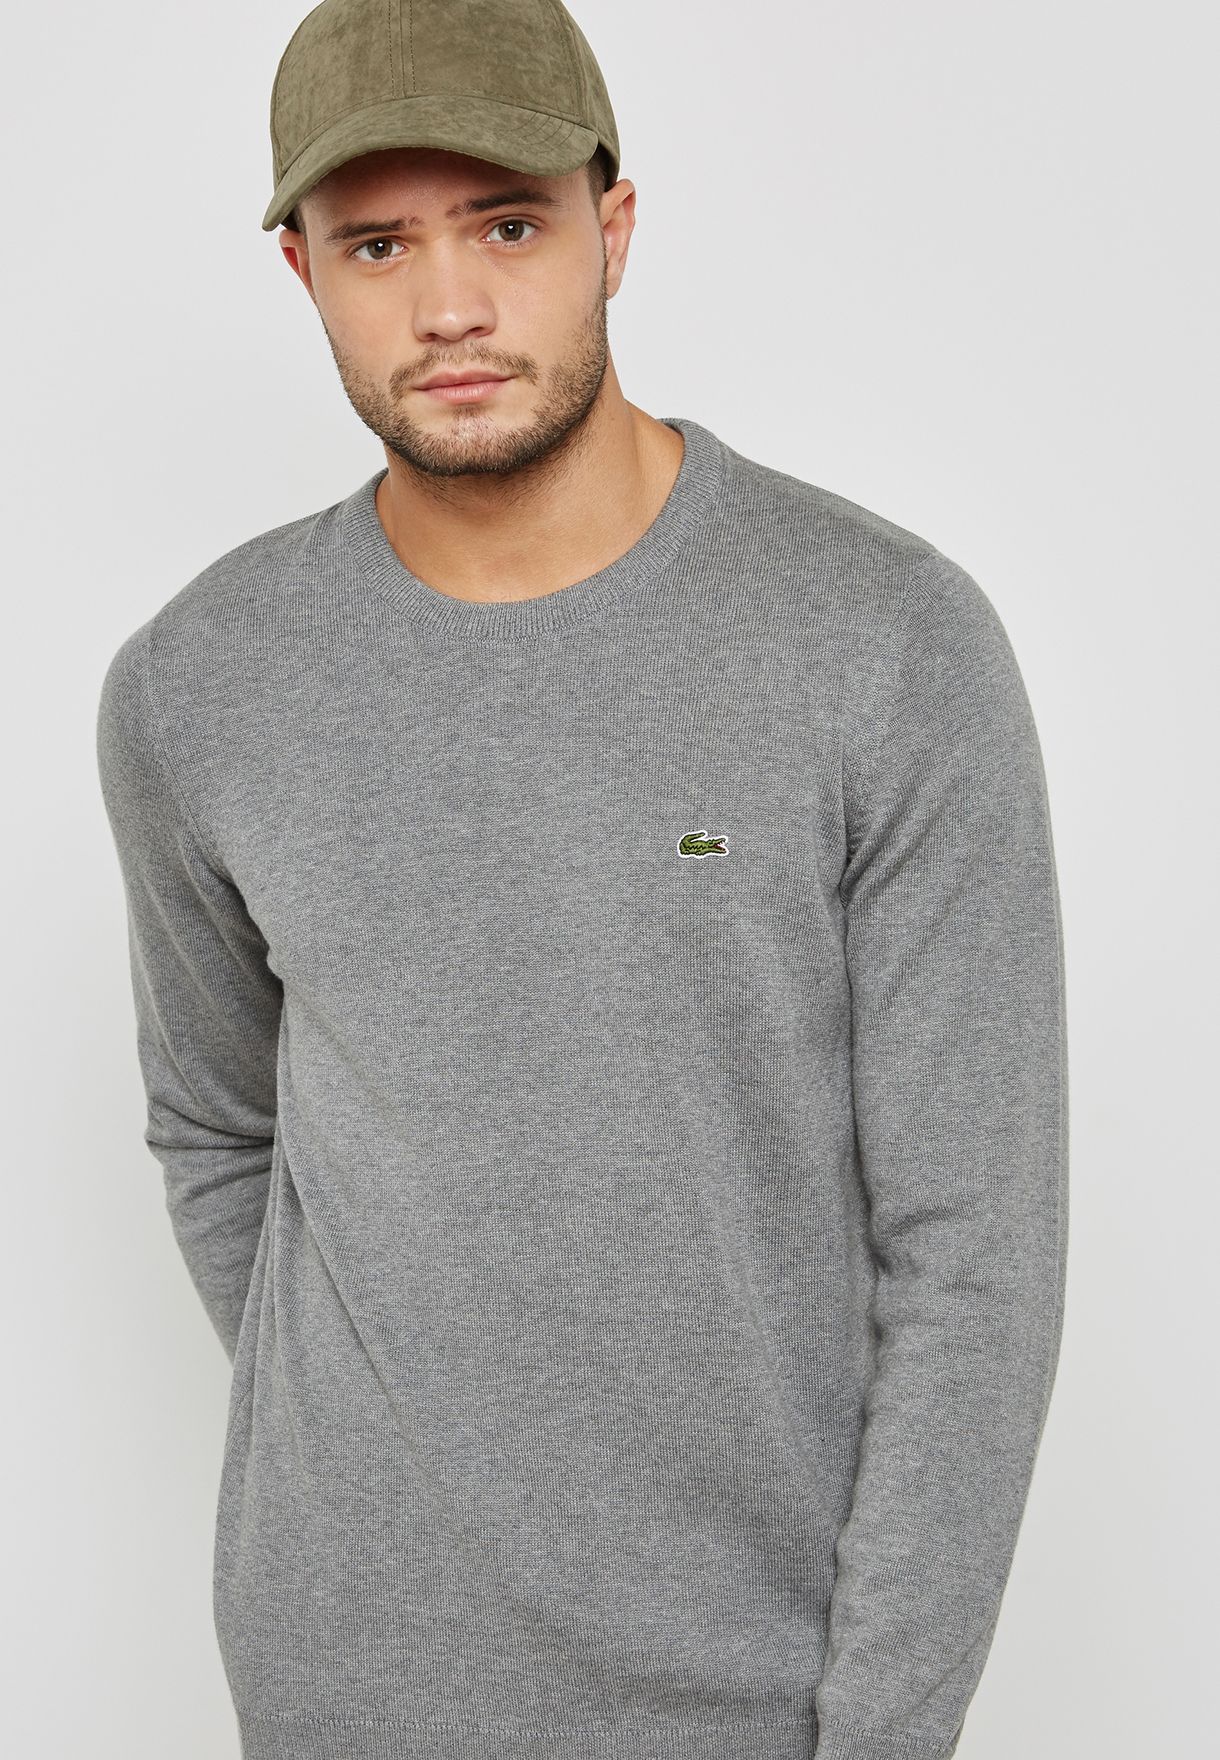 lacoste grey sweater